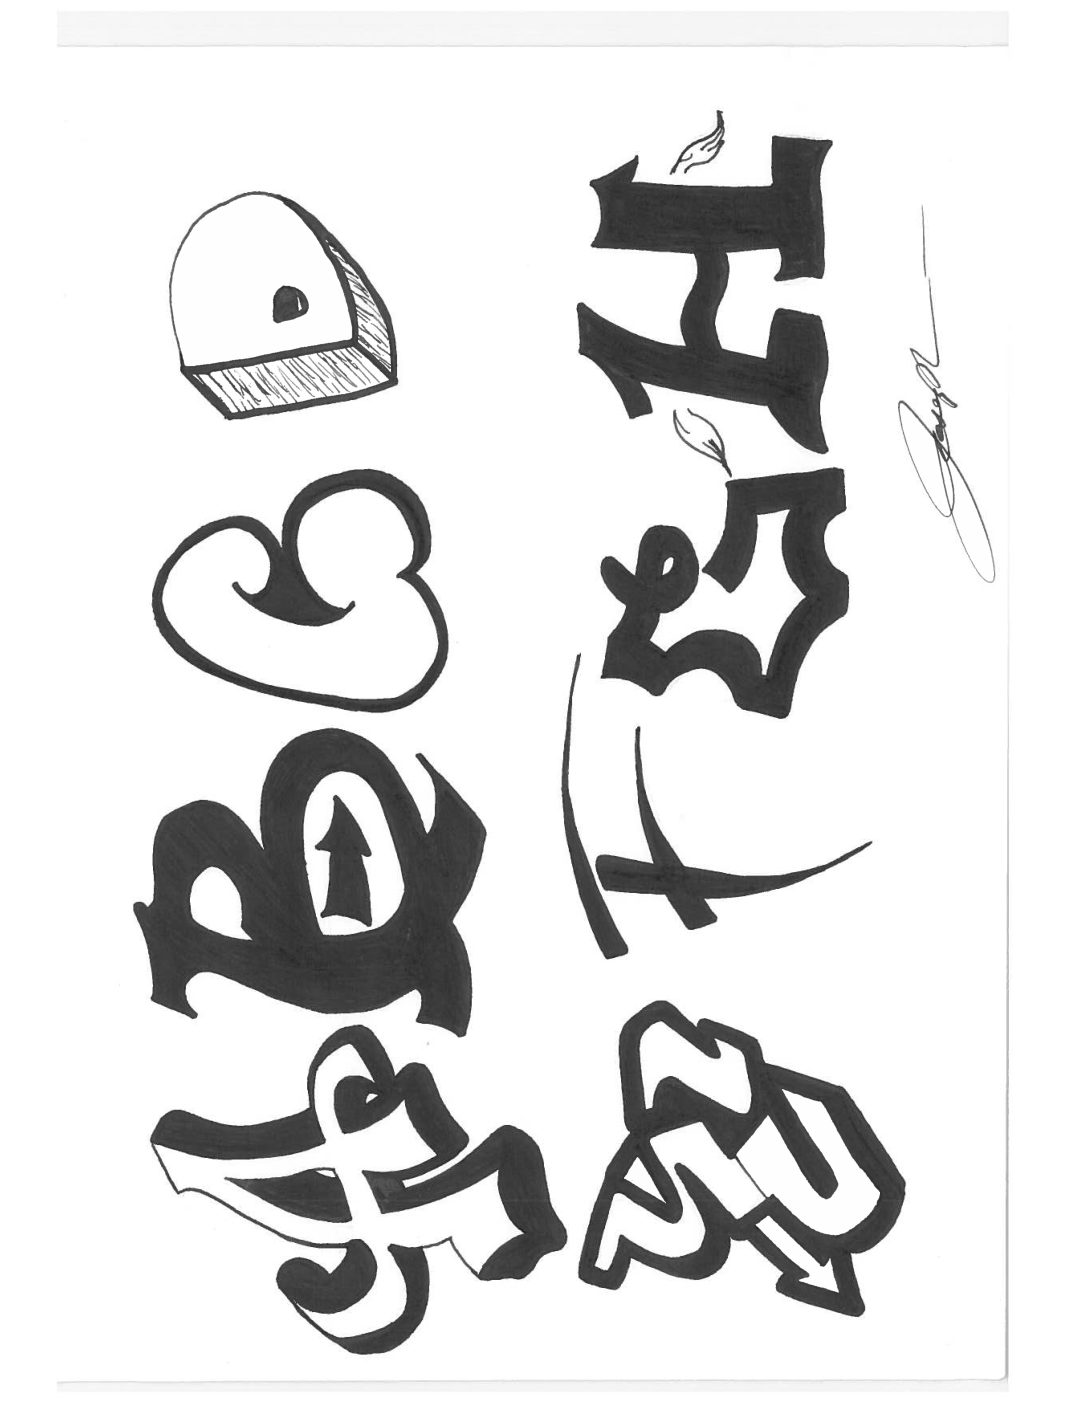 graffiti letter e